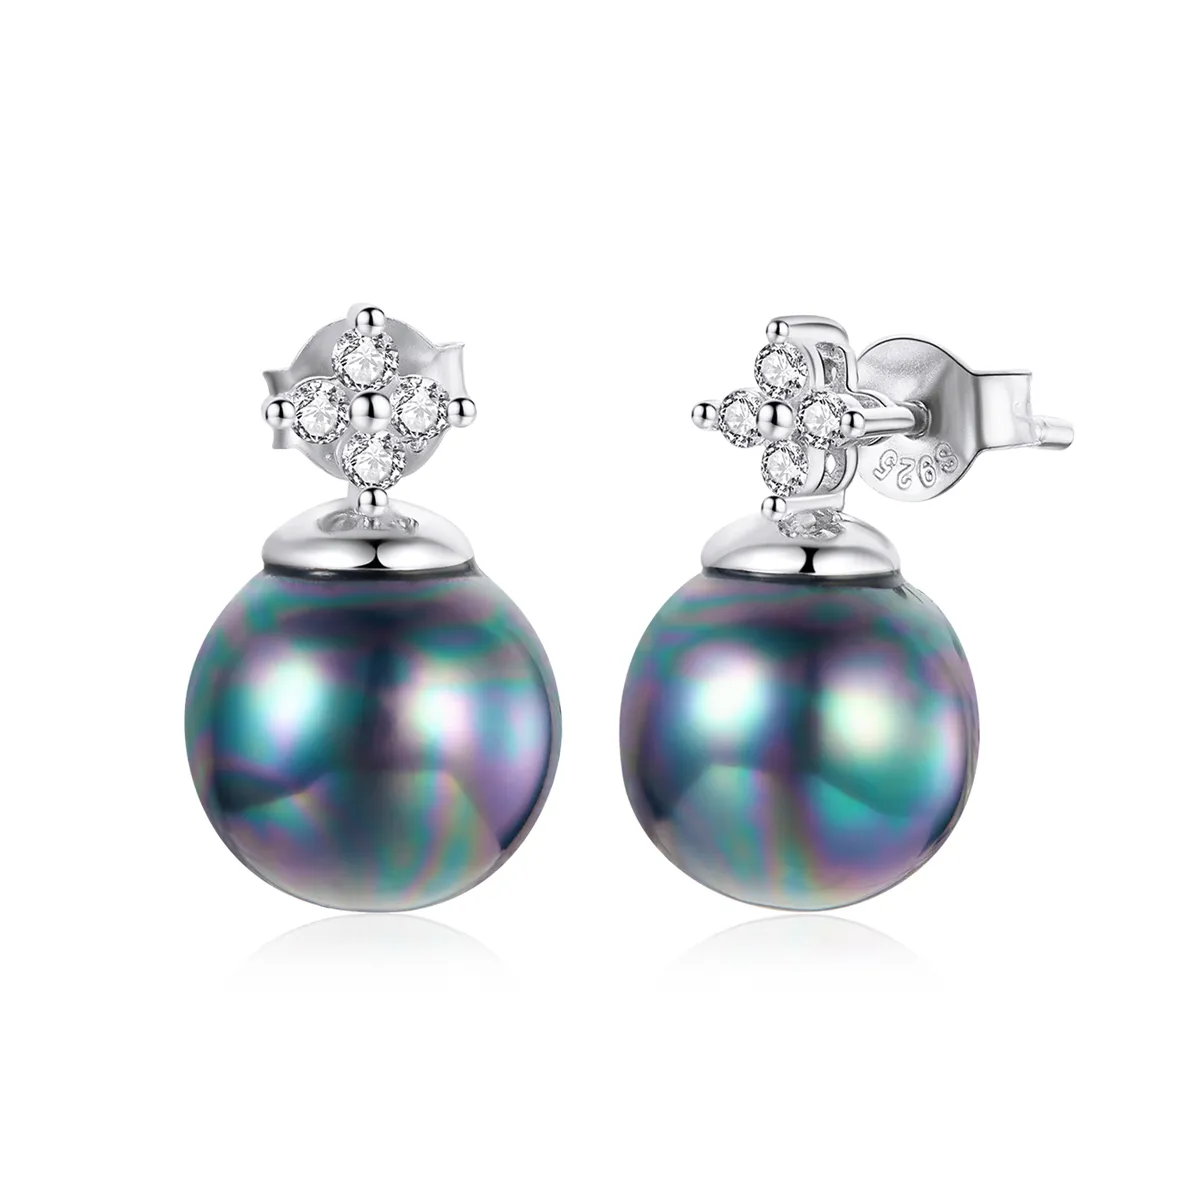 Pandora Style Shiny Beads Stud Earrings - BSE498